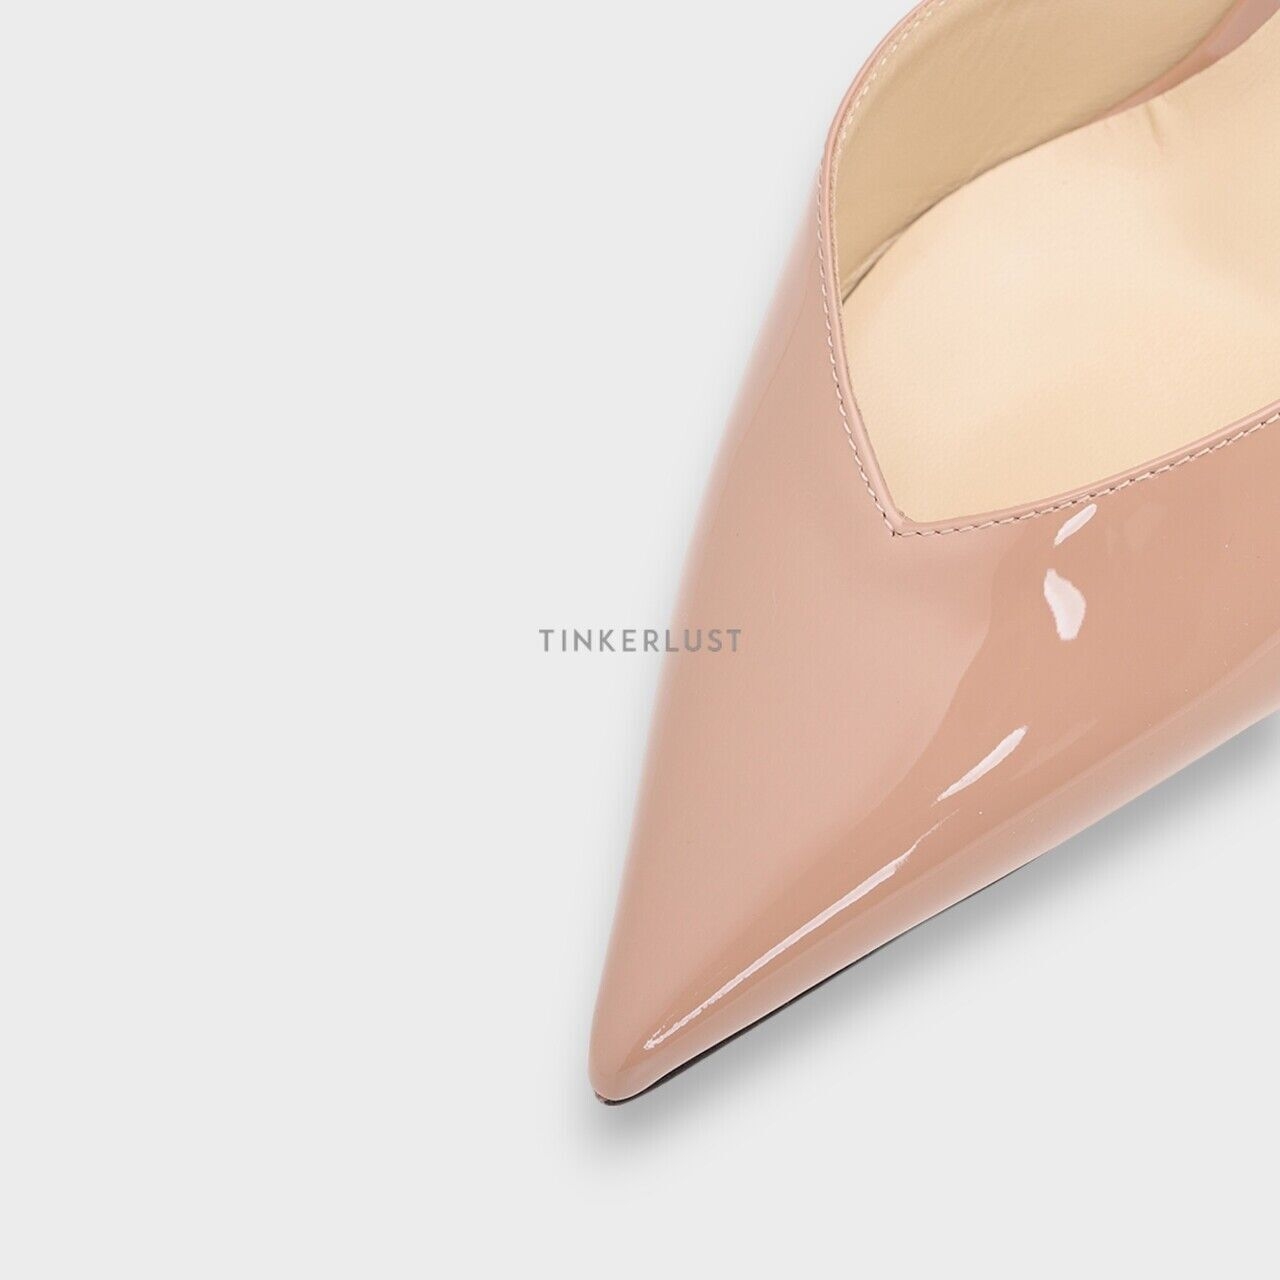 Jimmy Choo Saeda Ankle Crystal 85mm in Ballet Pink Patent Strap Heels